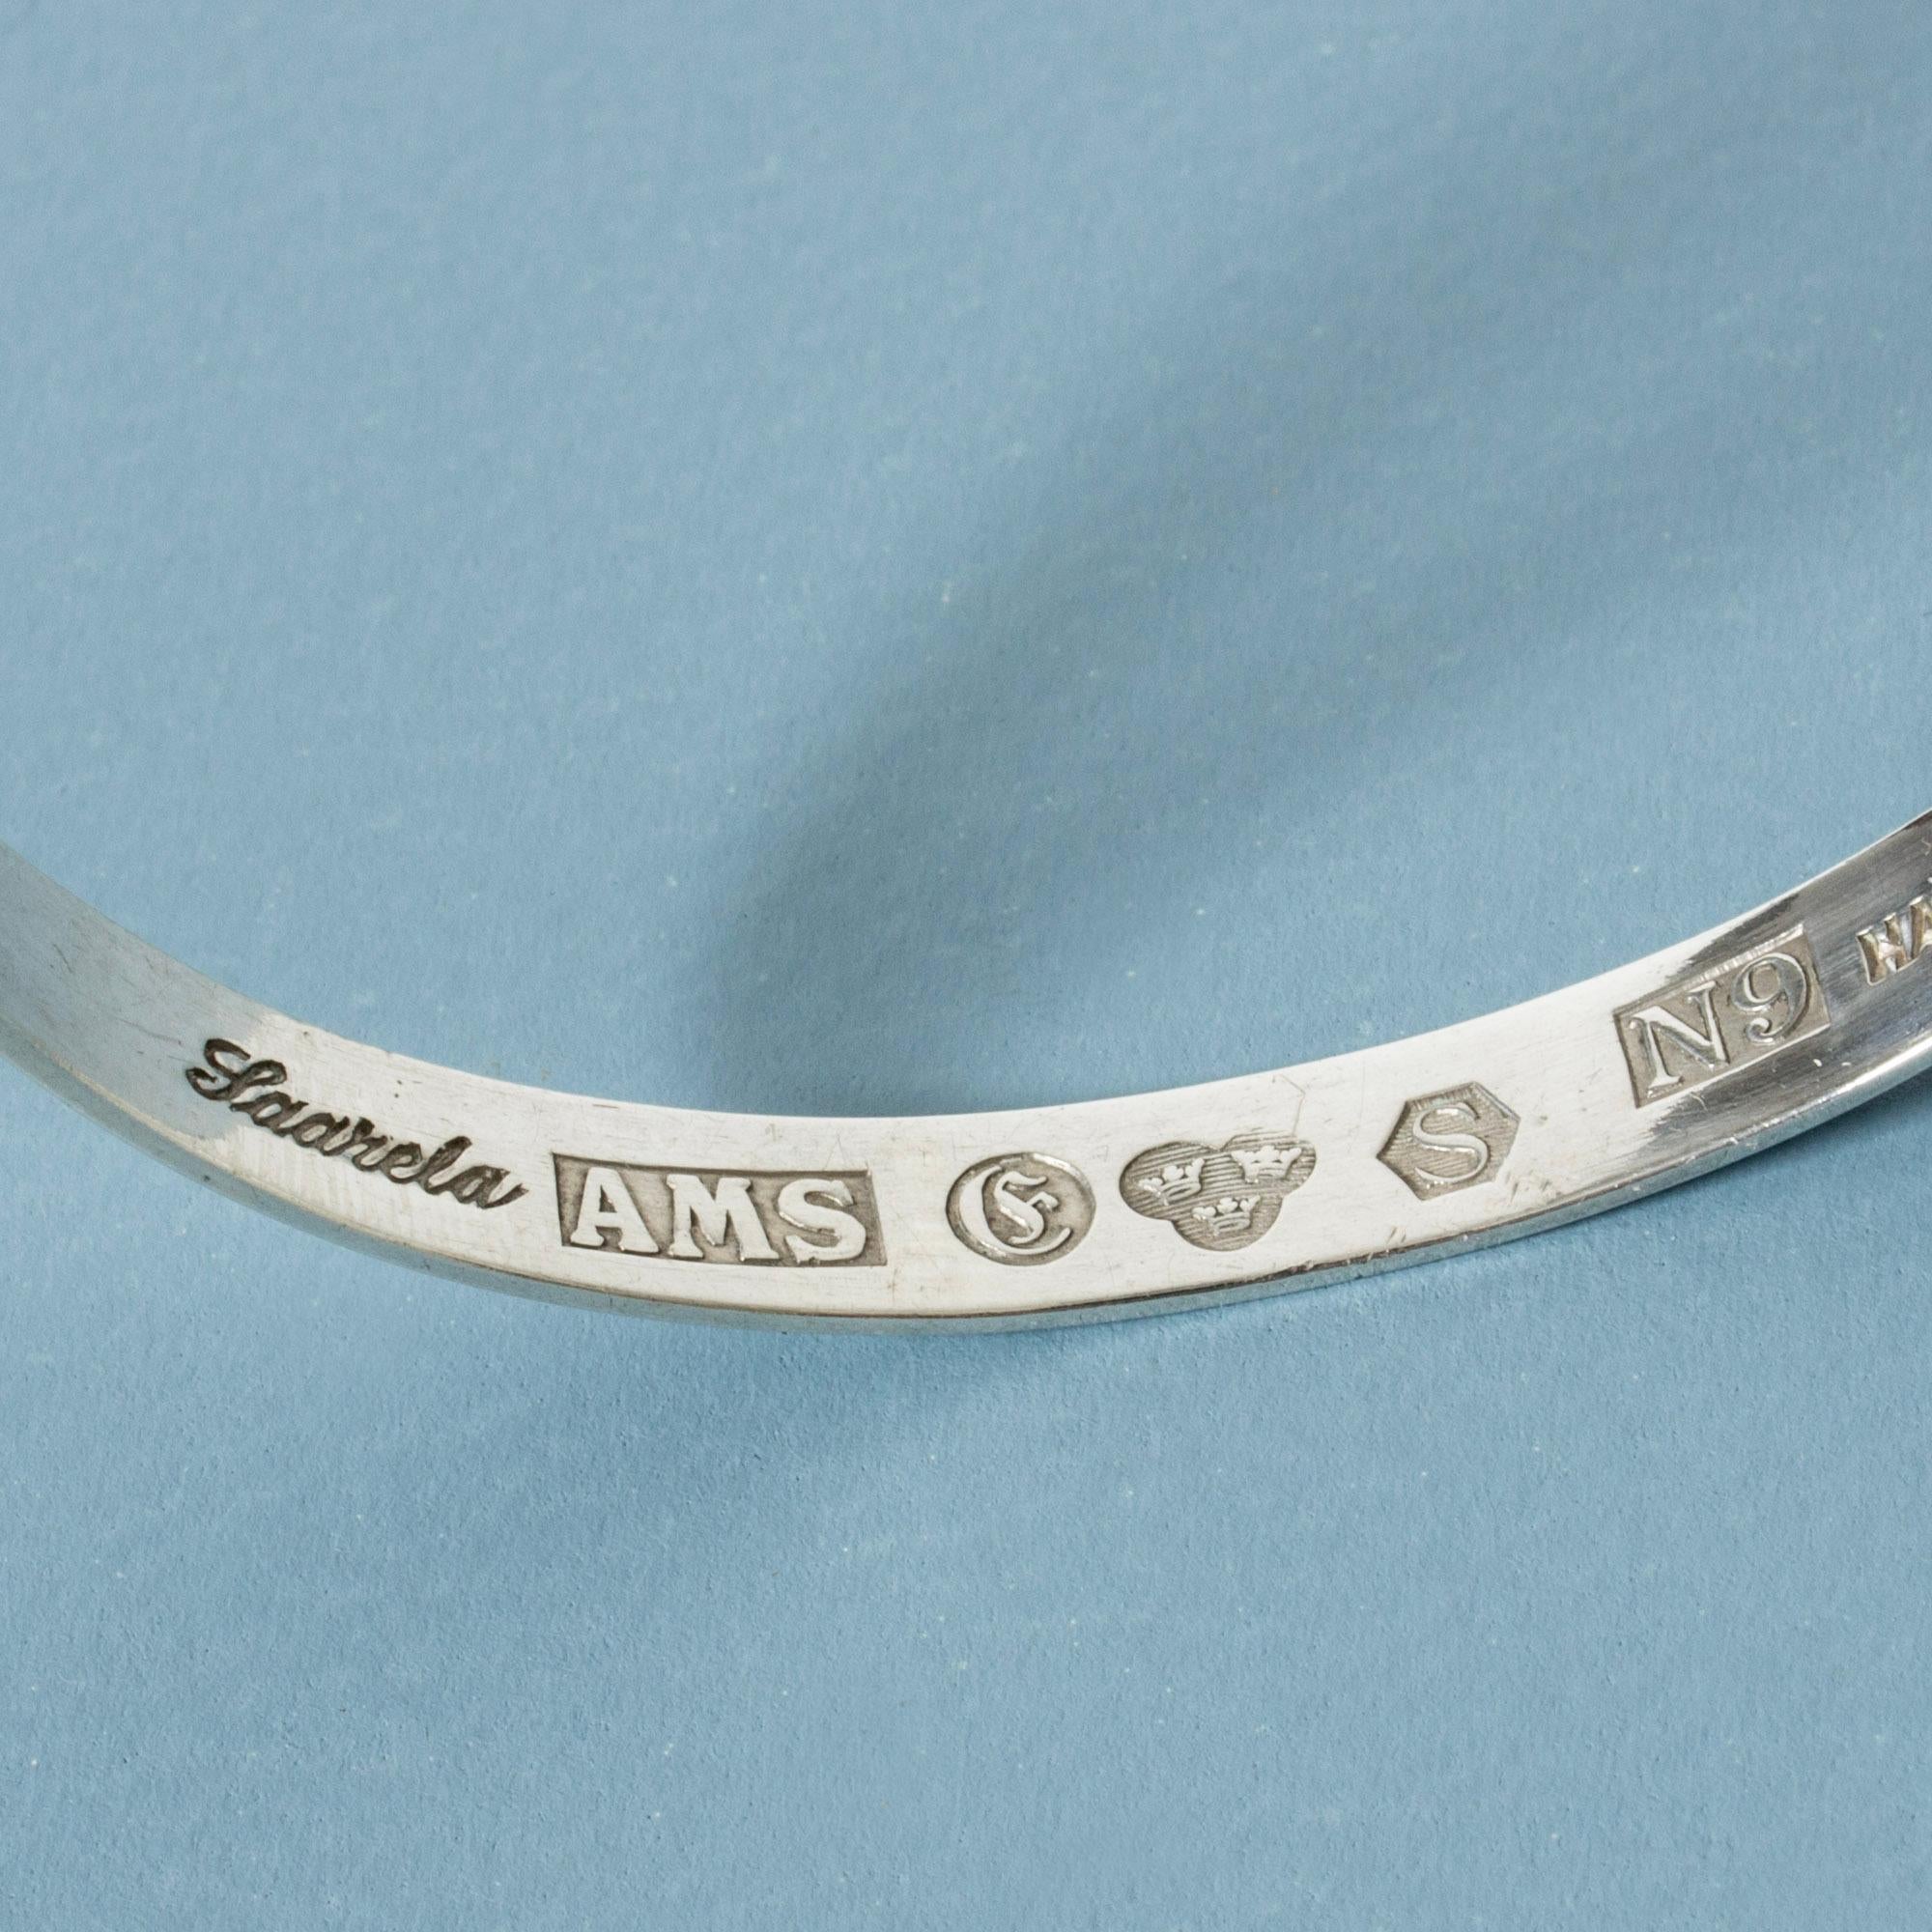 Women's Modernist Silver Bracelet with Amethyst and Tourmaline, Sweden, 1968